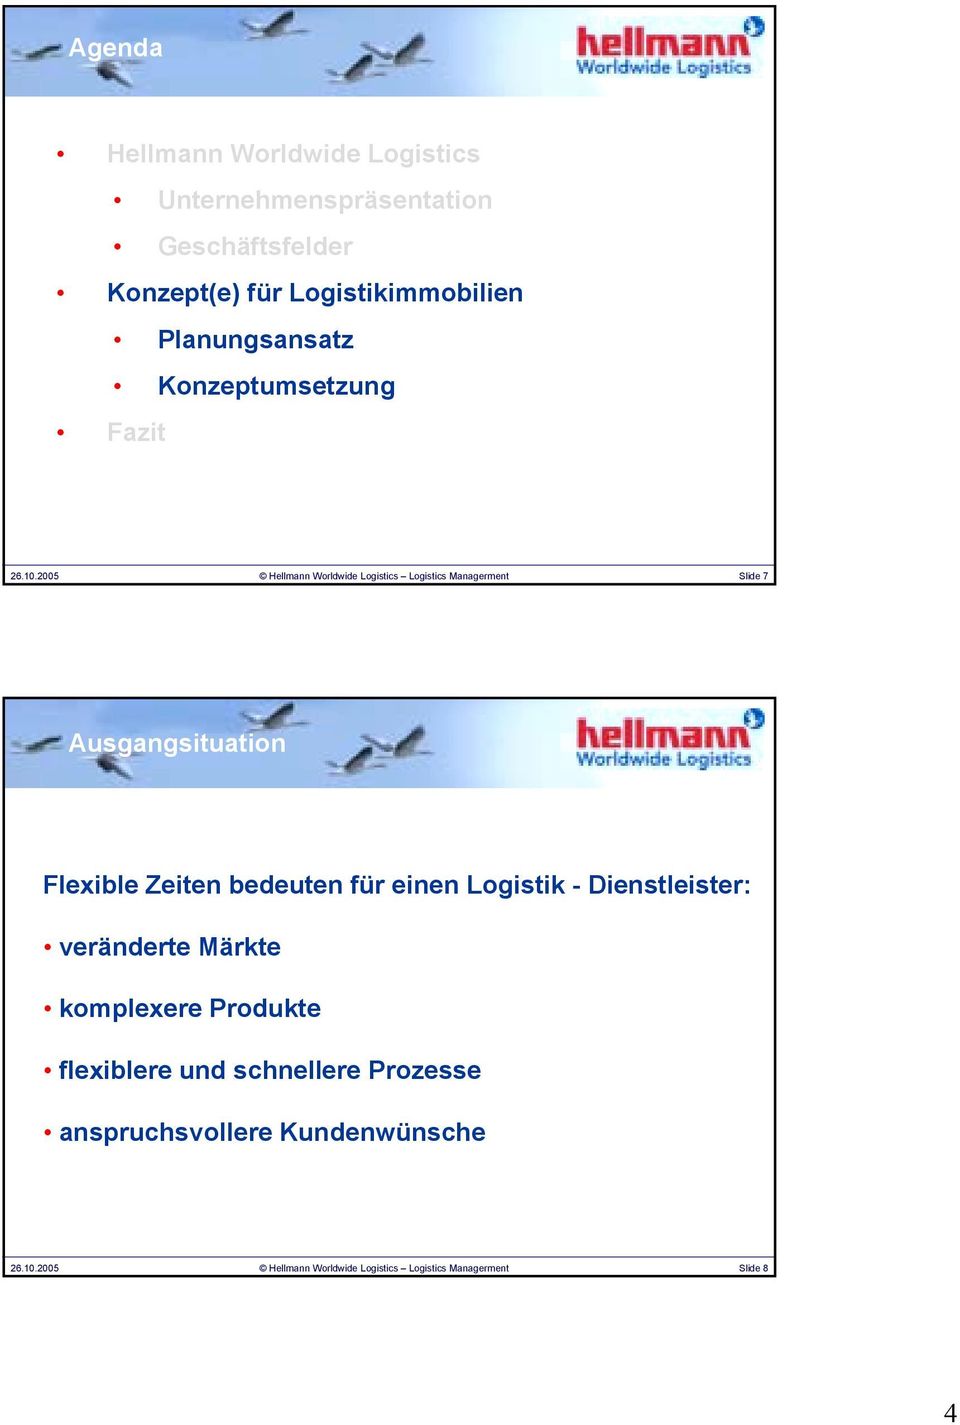 2005 Hellmann Worldwide Logistics Logistics Managerment Slide 7 Ausgangsituation Flexible Zeiten bedeuten für einen